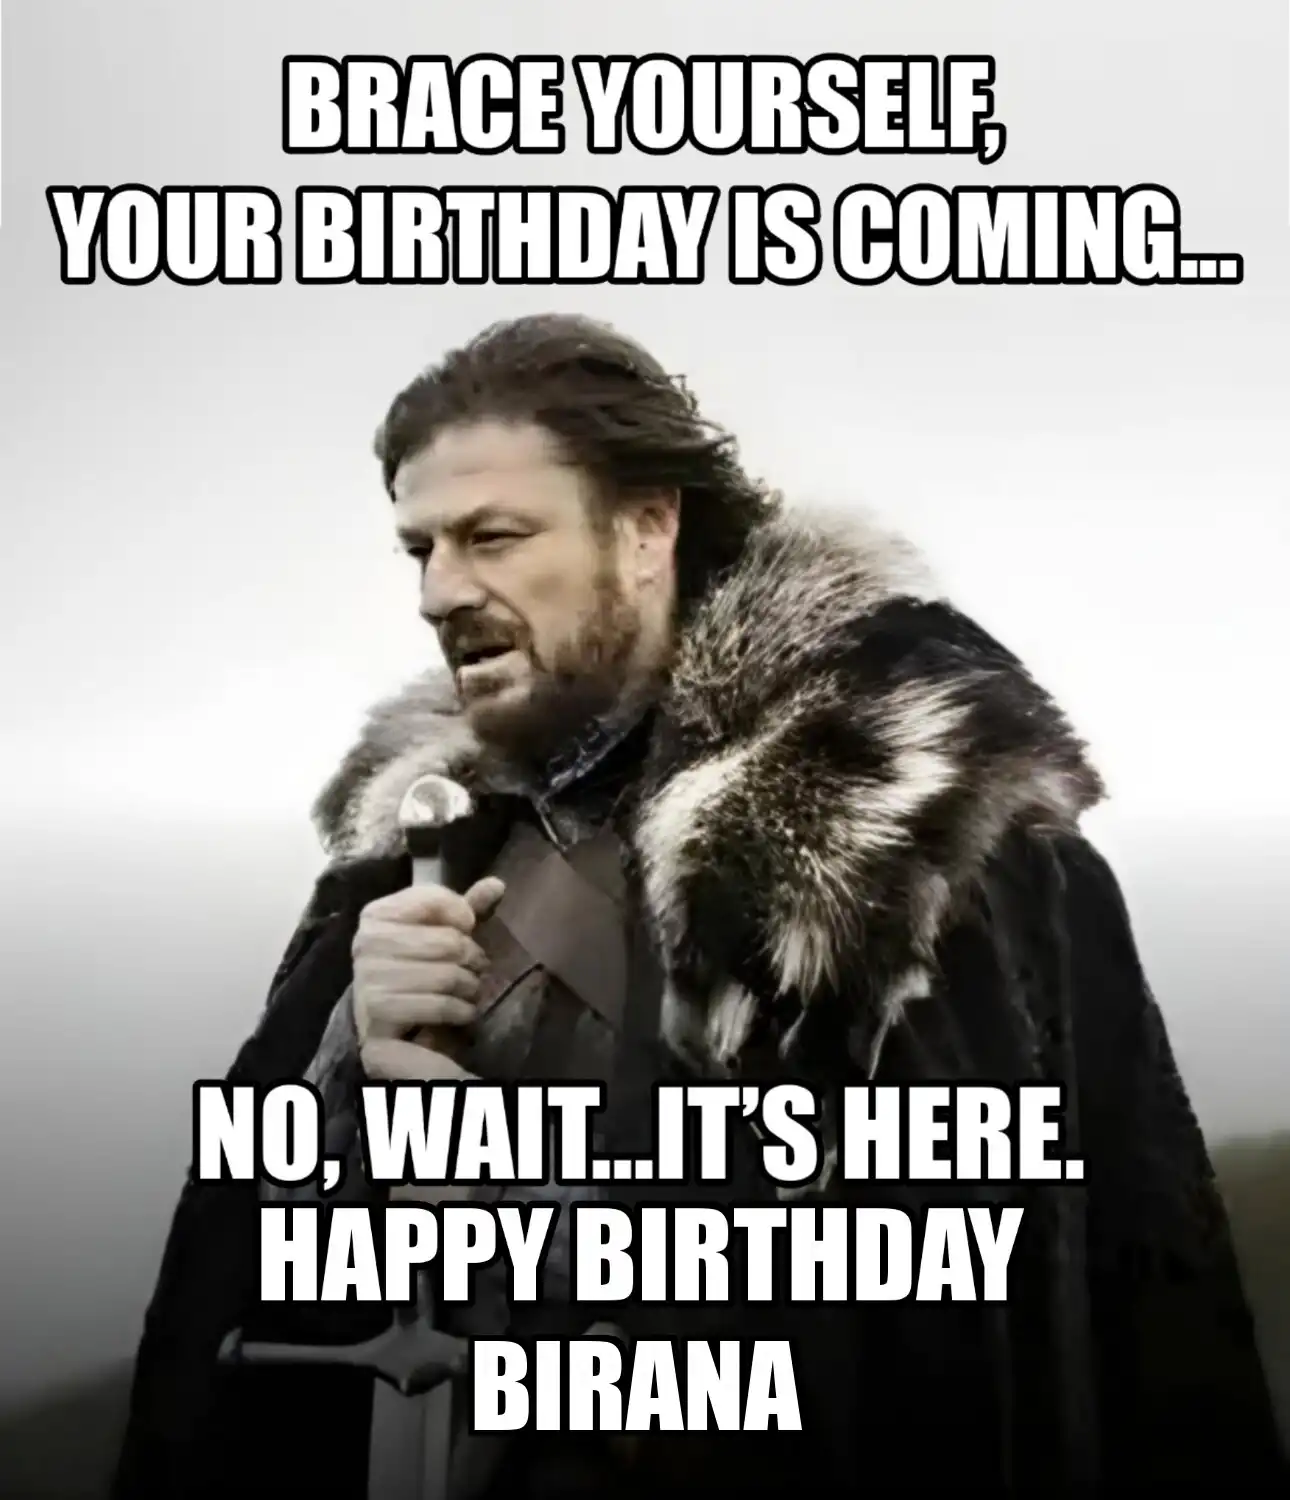 Happy Birthday Birana Brace Yourself Your Birthday Is Coming Meme